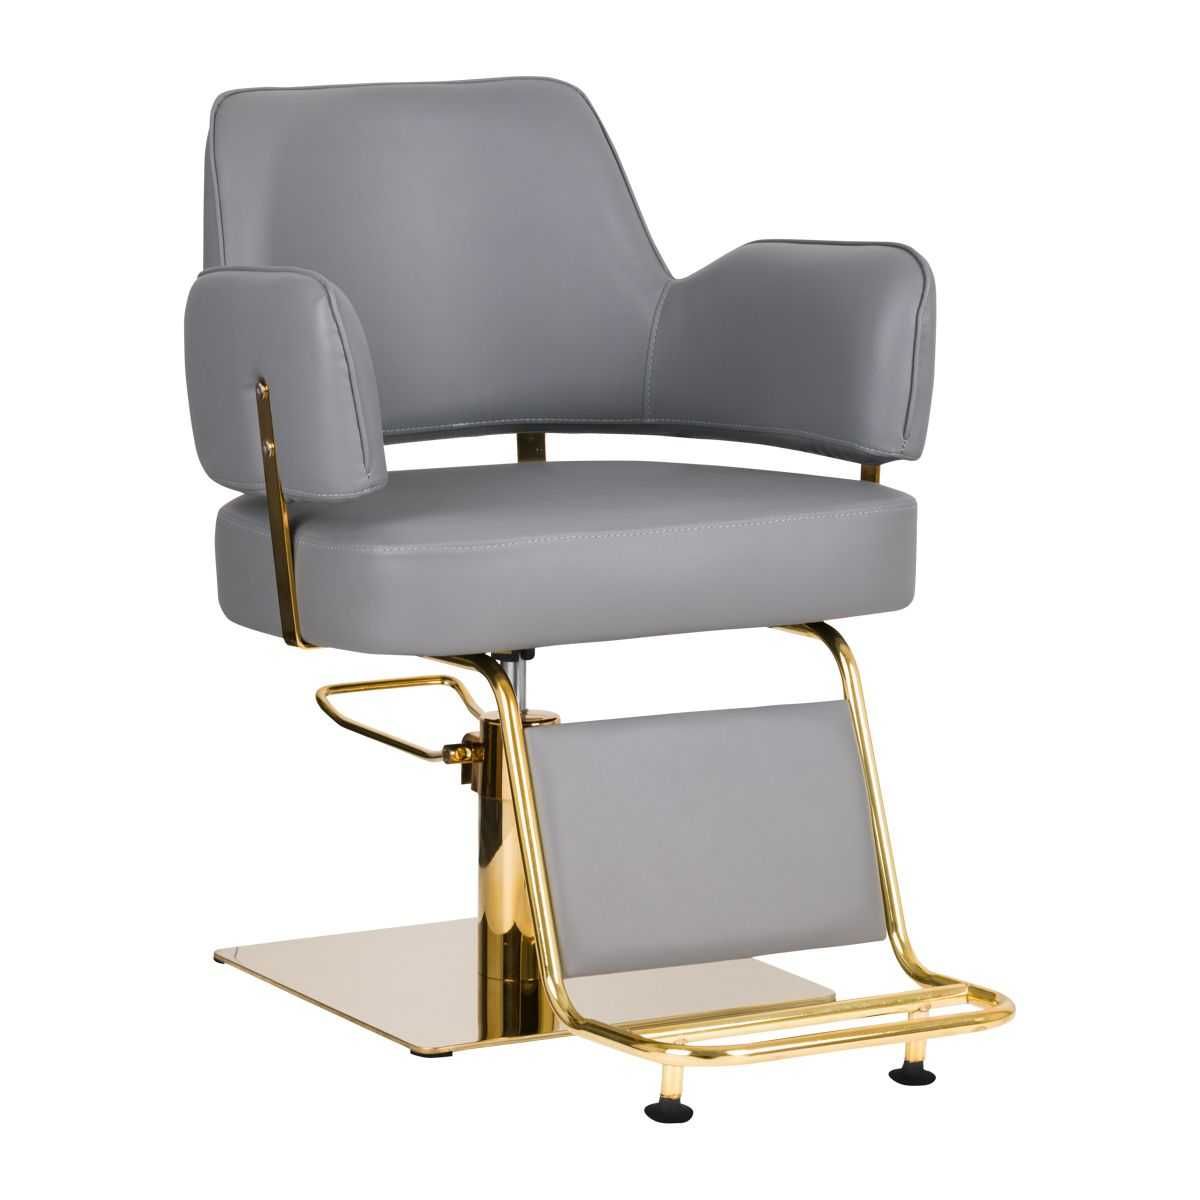 * Професионални фризьорски столове - НОВИ- модели